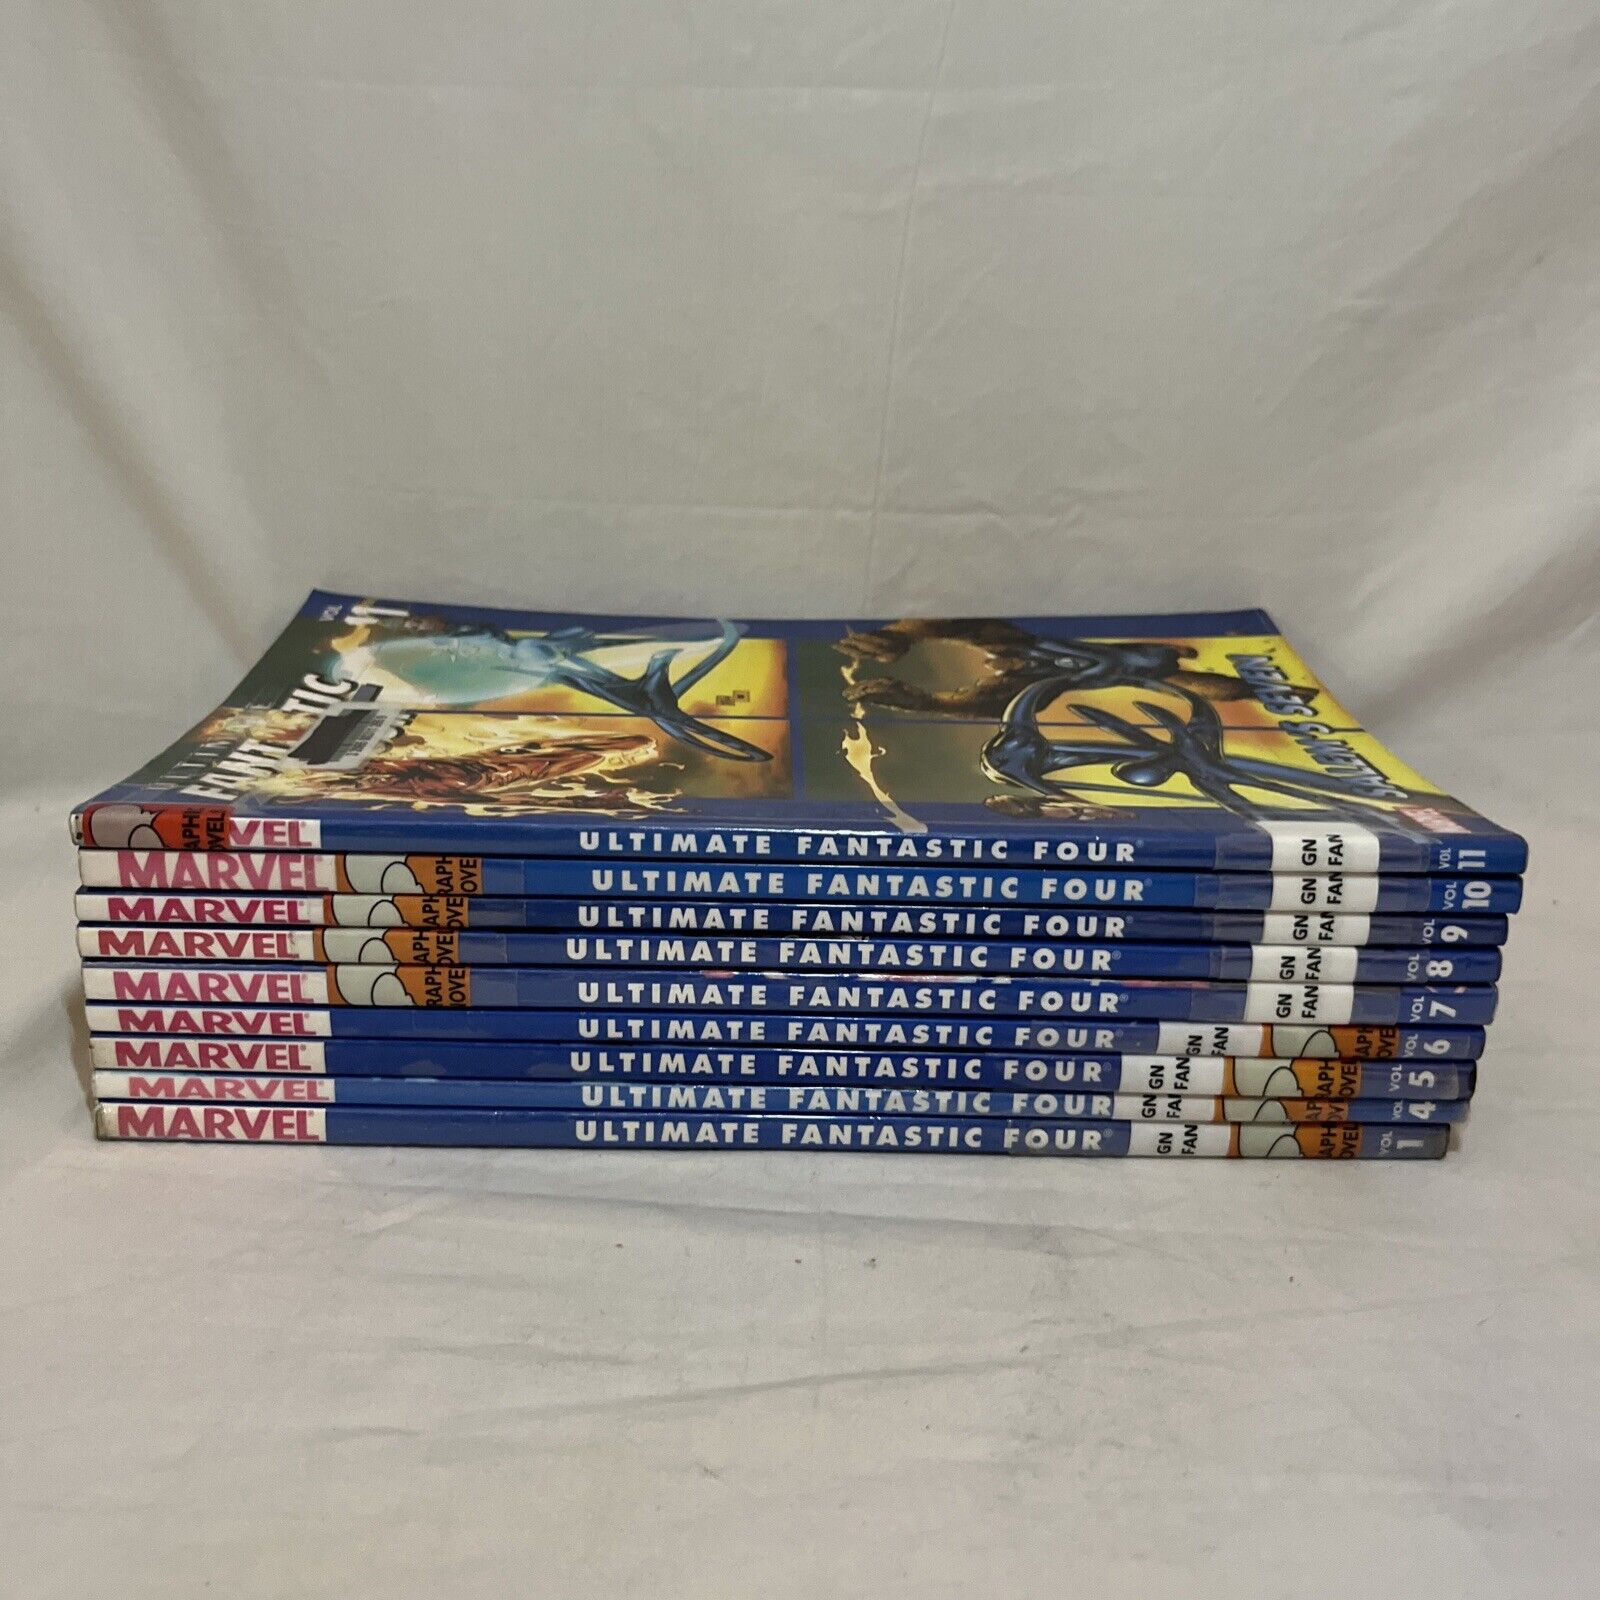 Ultimate Fantastic Four TPB Lot of 9 Volume 1 4 5 6 7 8 9 10 11 MISSING #2 3